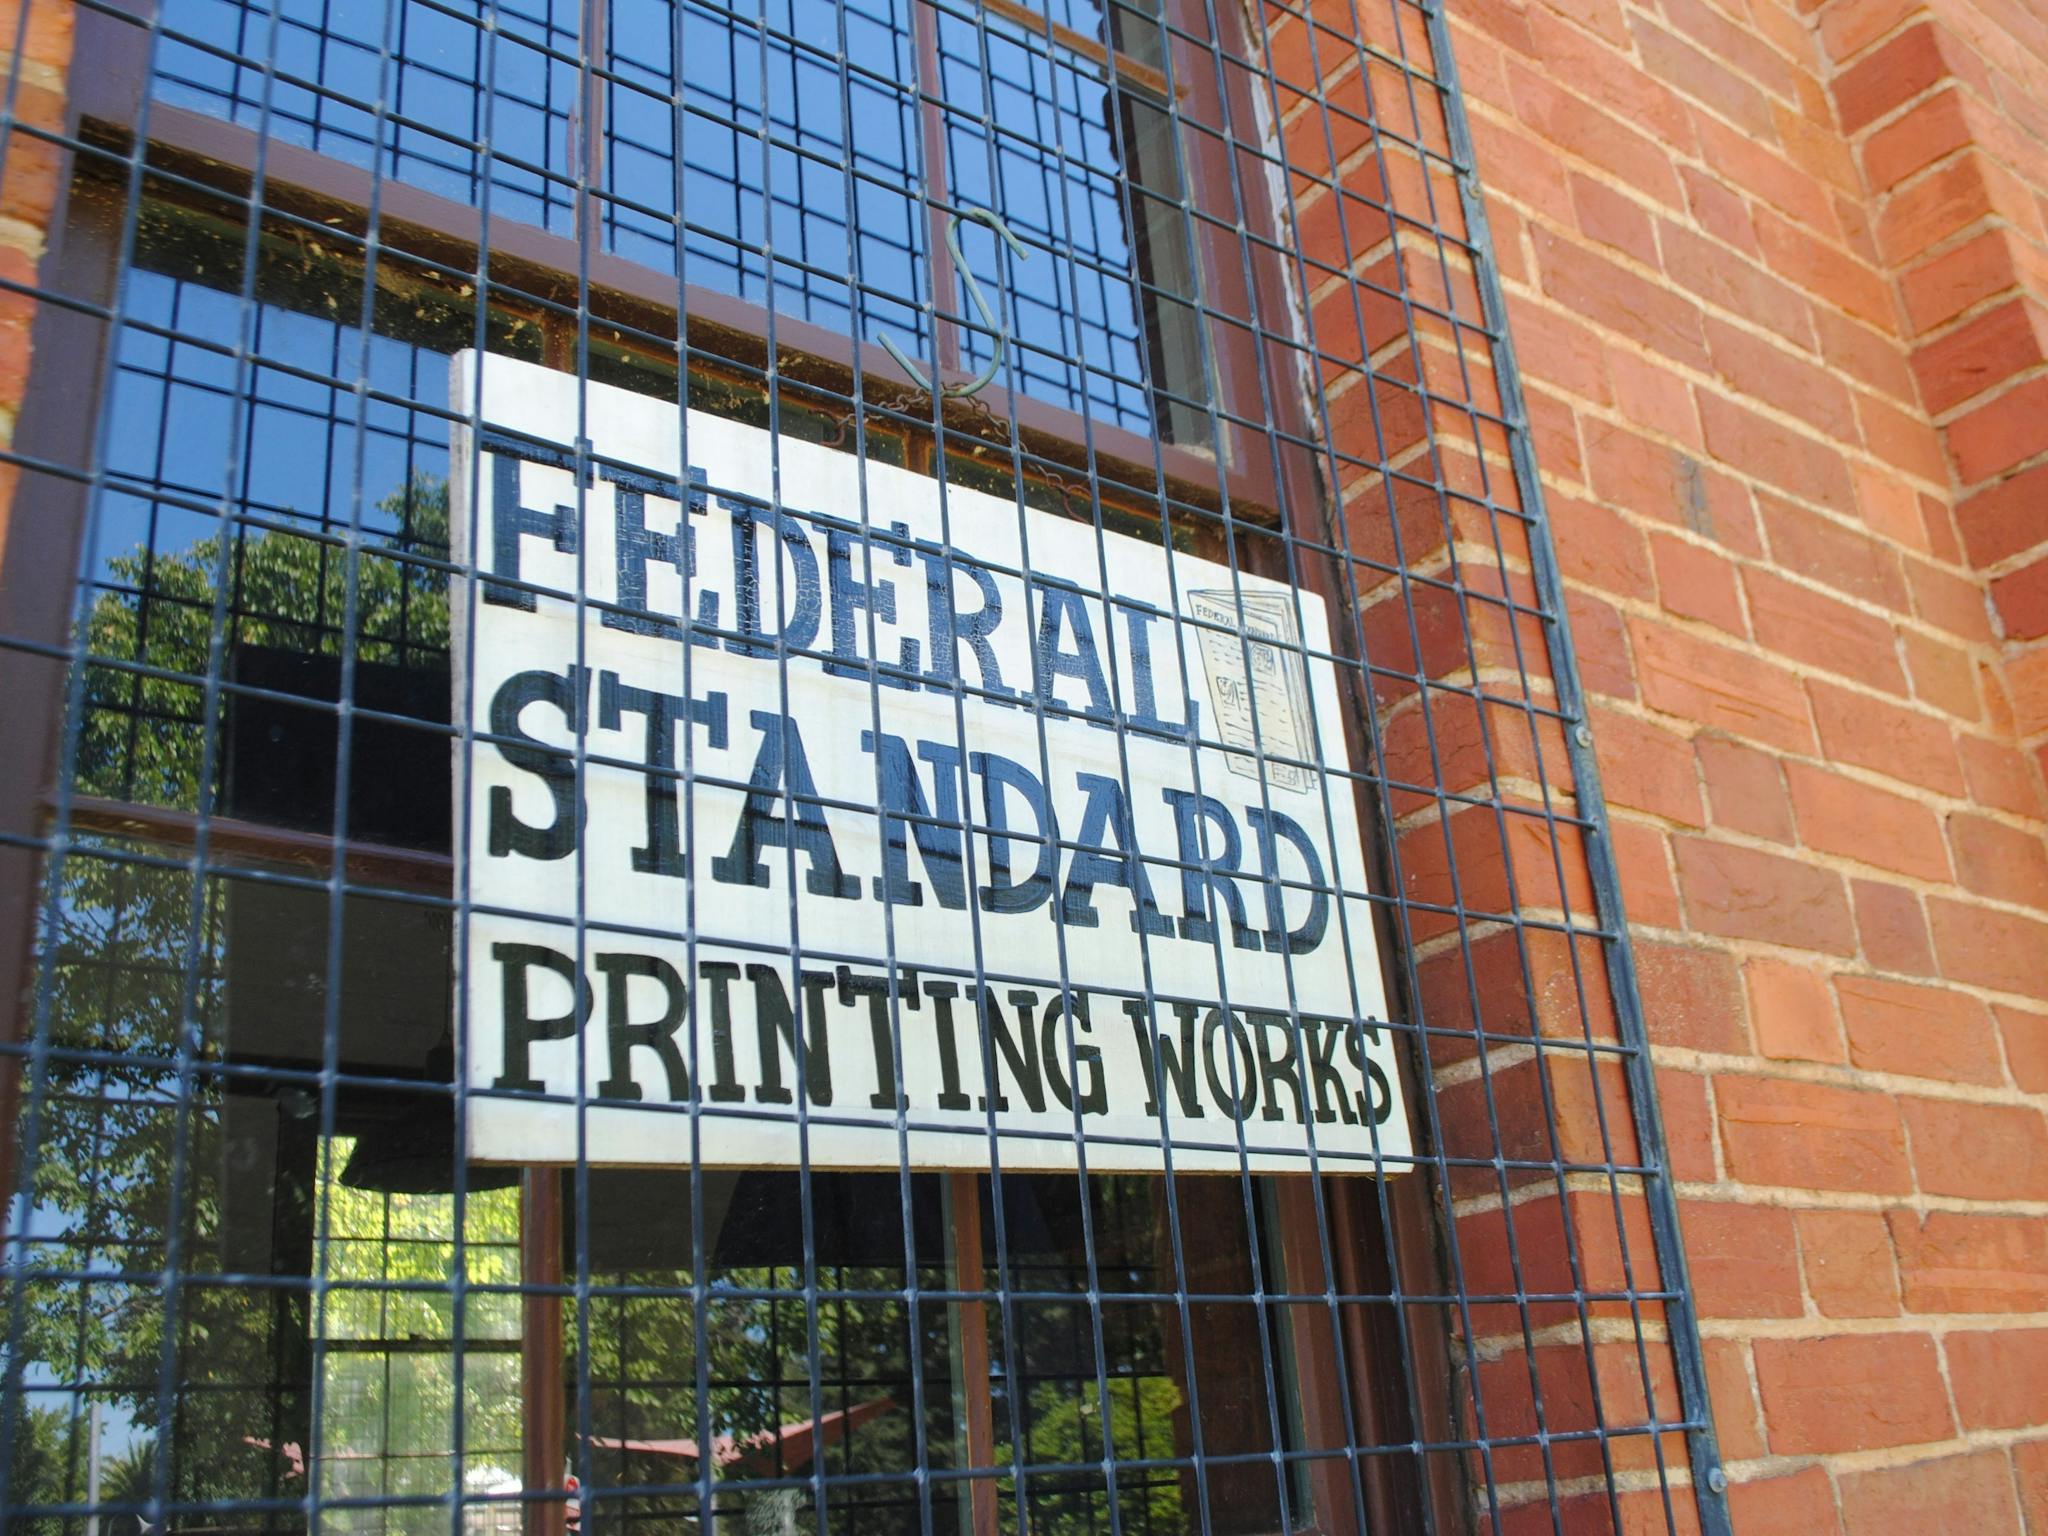 The Federal Standard Printing Works